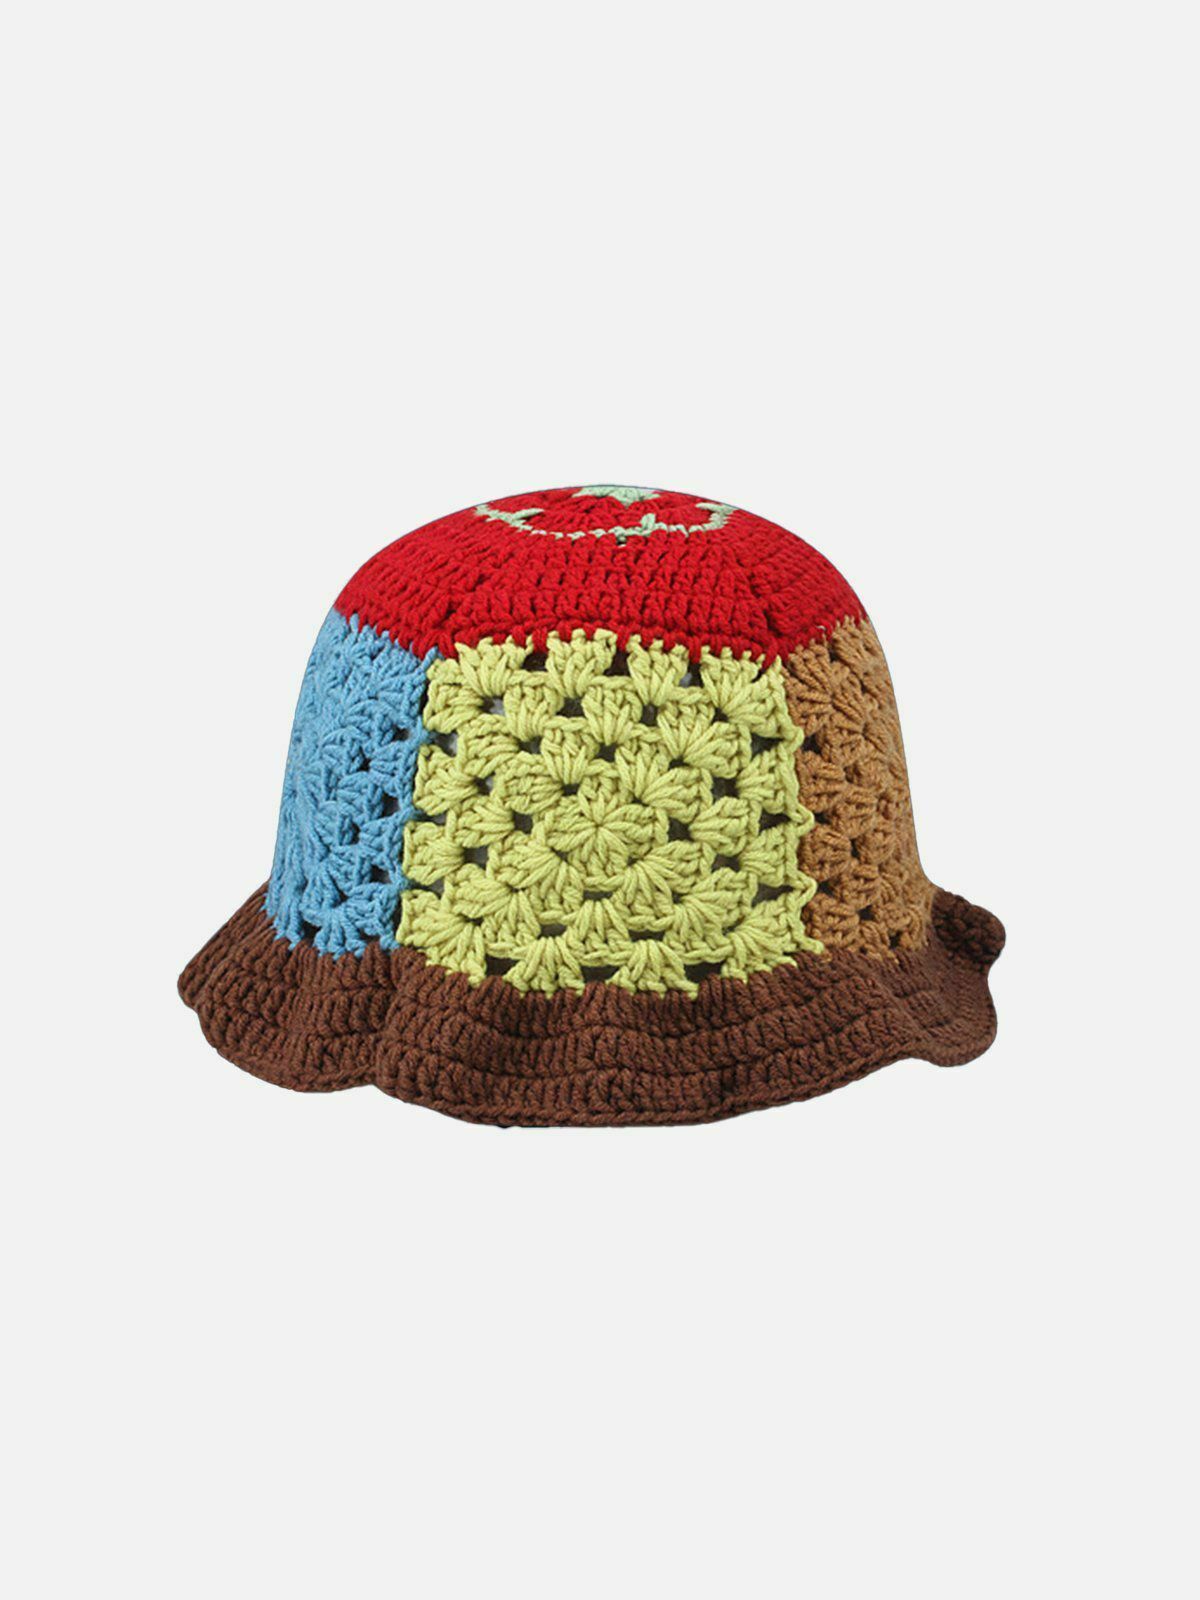 handmade crochet bucket hat   chic open knit design 7062